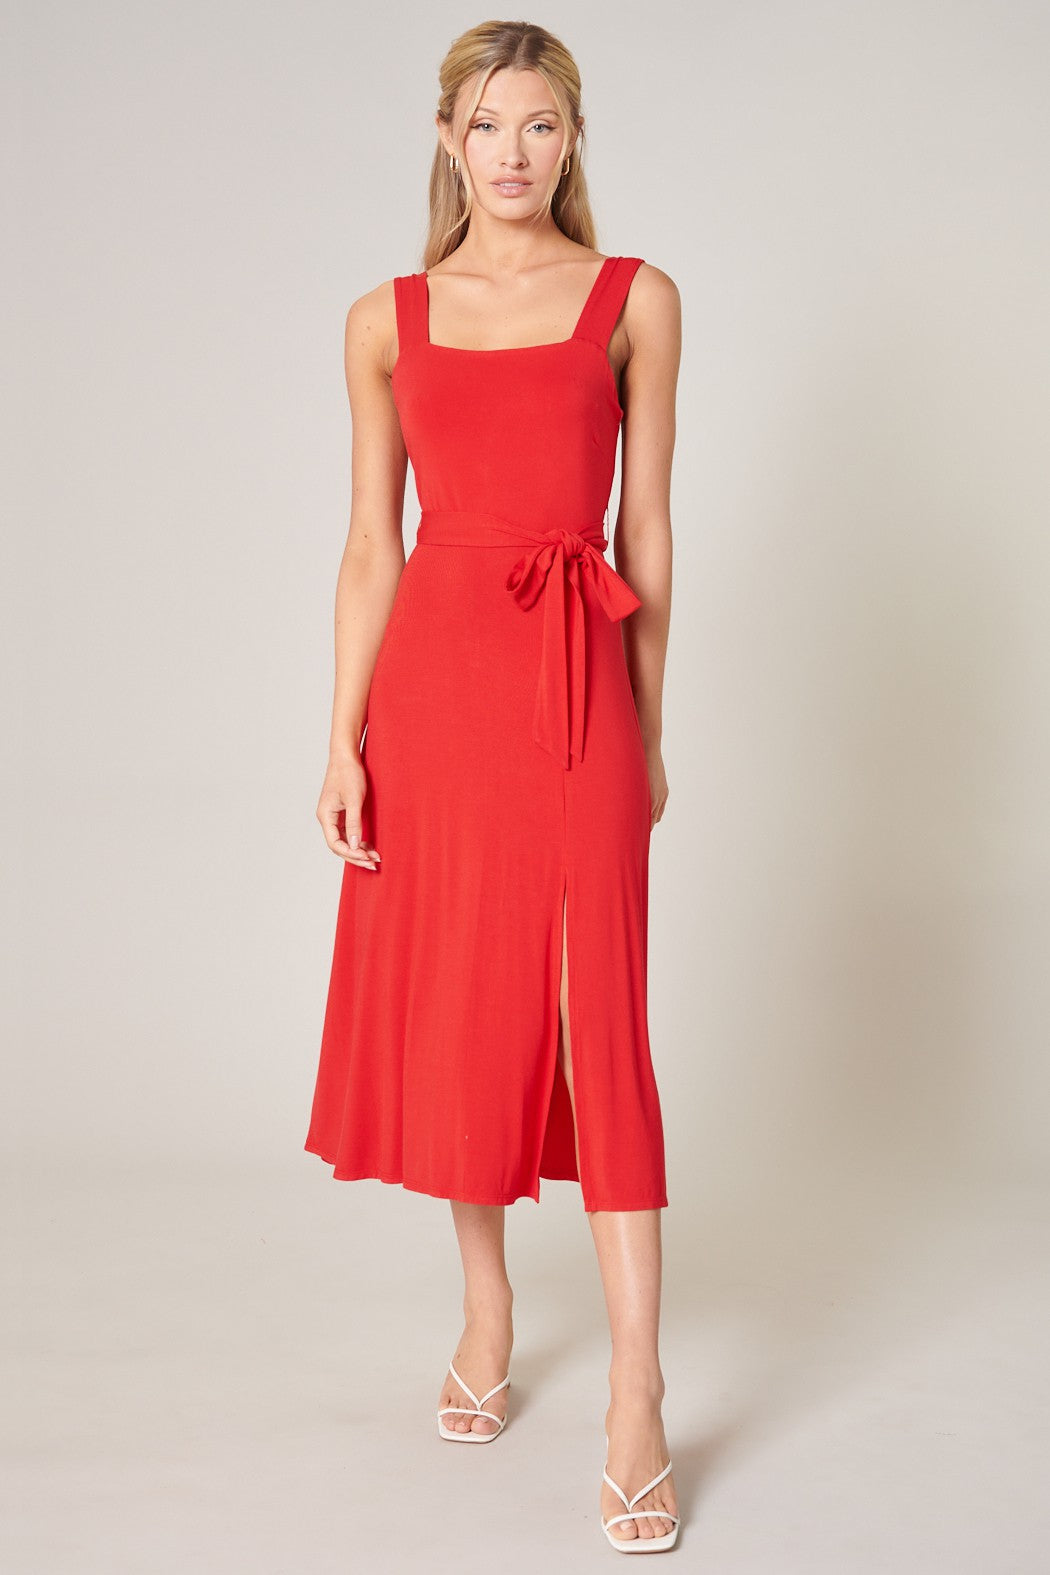 Versace Sleeveless Midi Dress - Farfetch